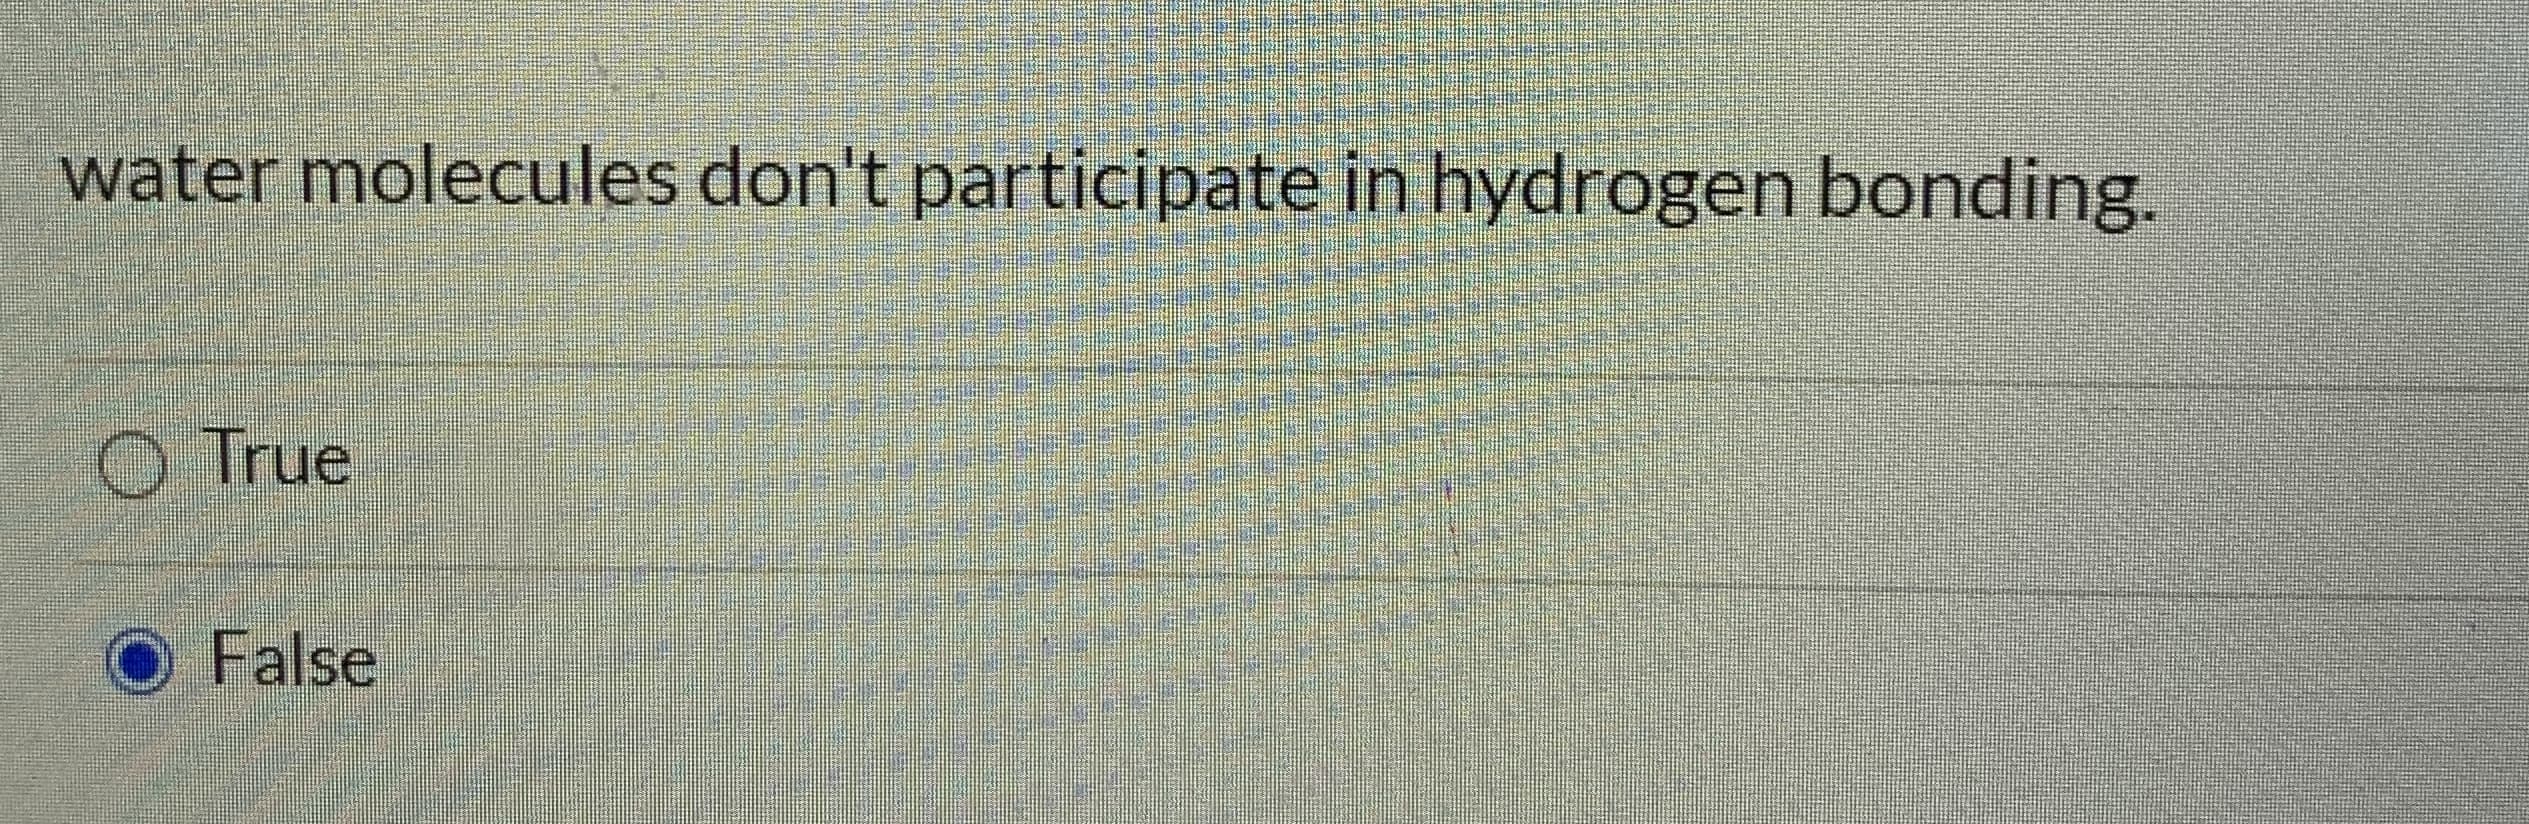 water molecules don't participate in hydrogen bonding.
